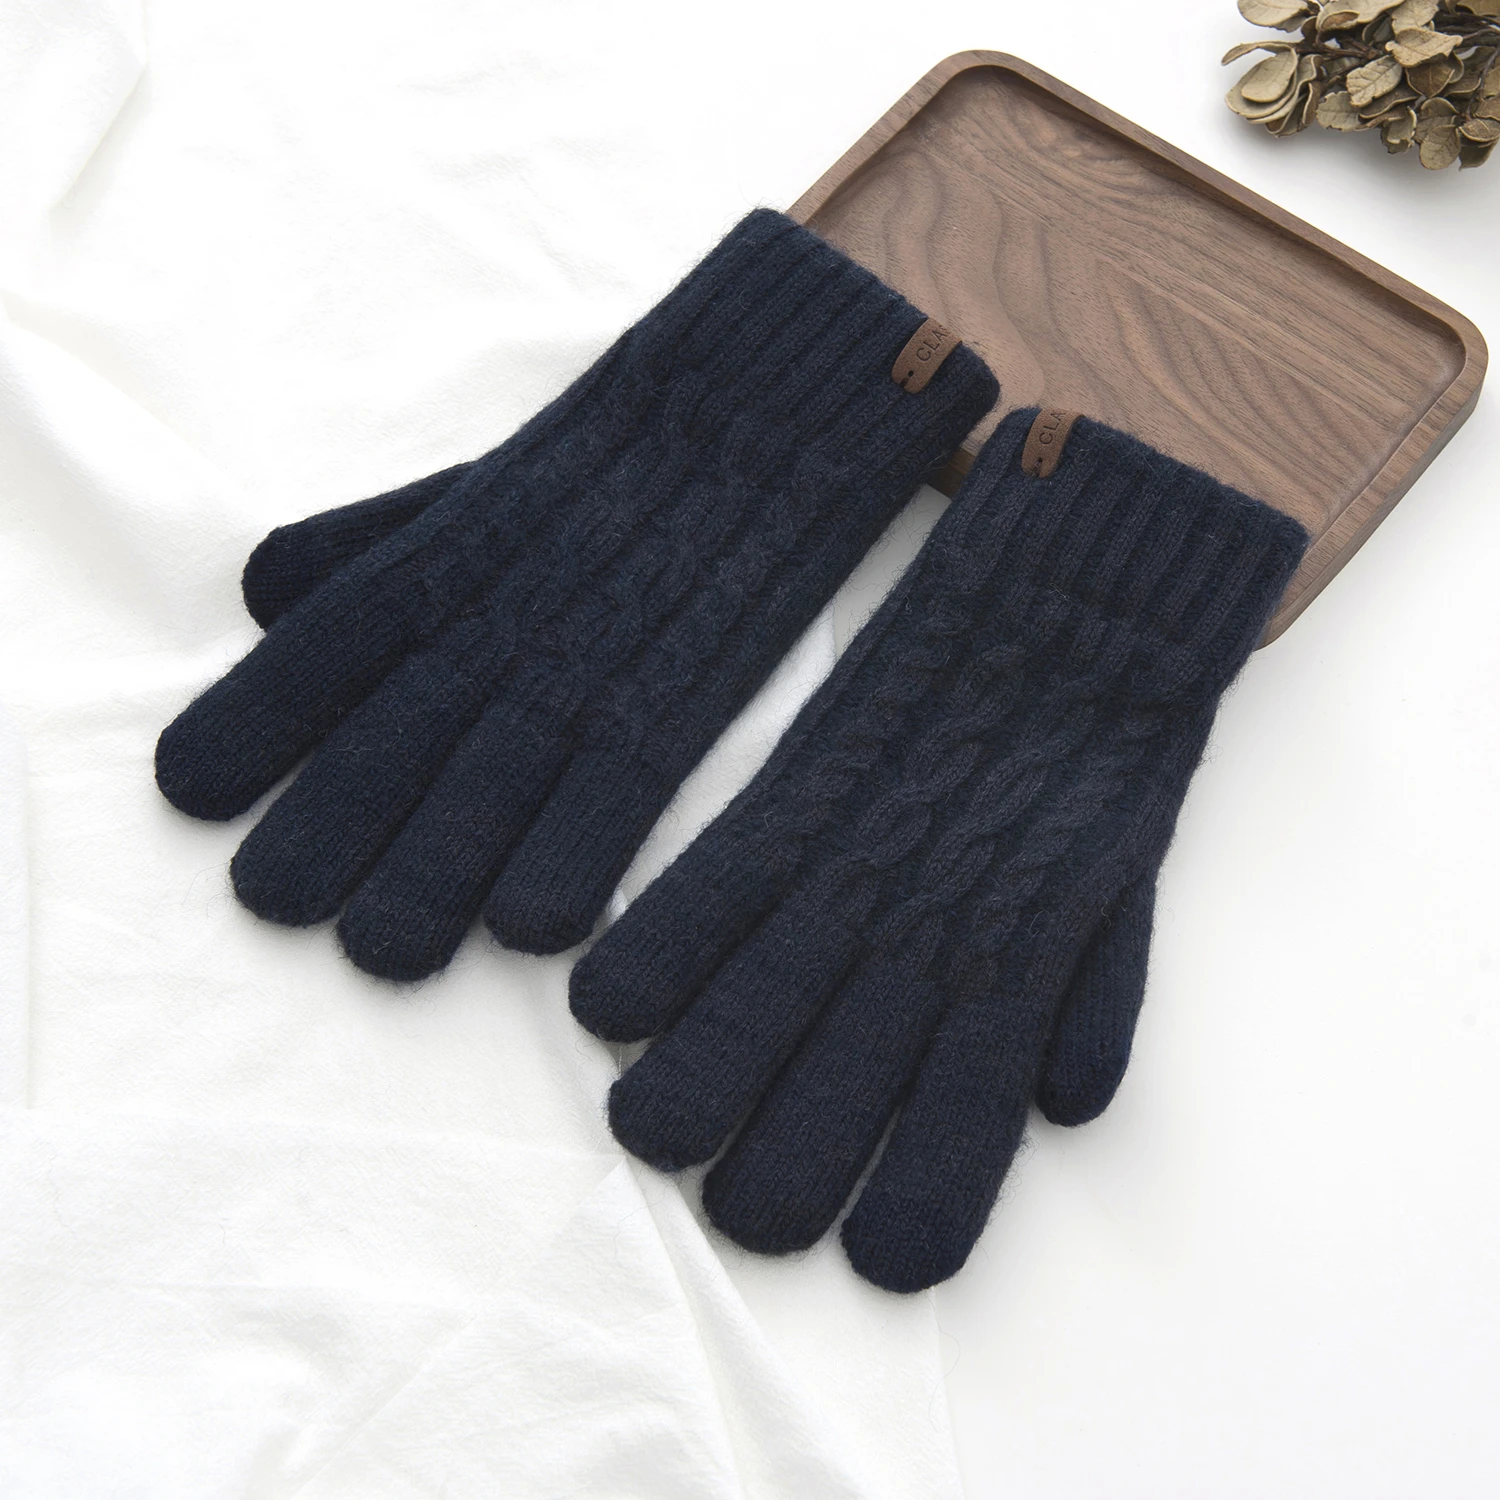 Cheap Winter warm soft outdoorwear customizable man warm gloves